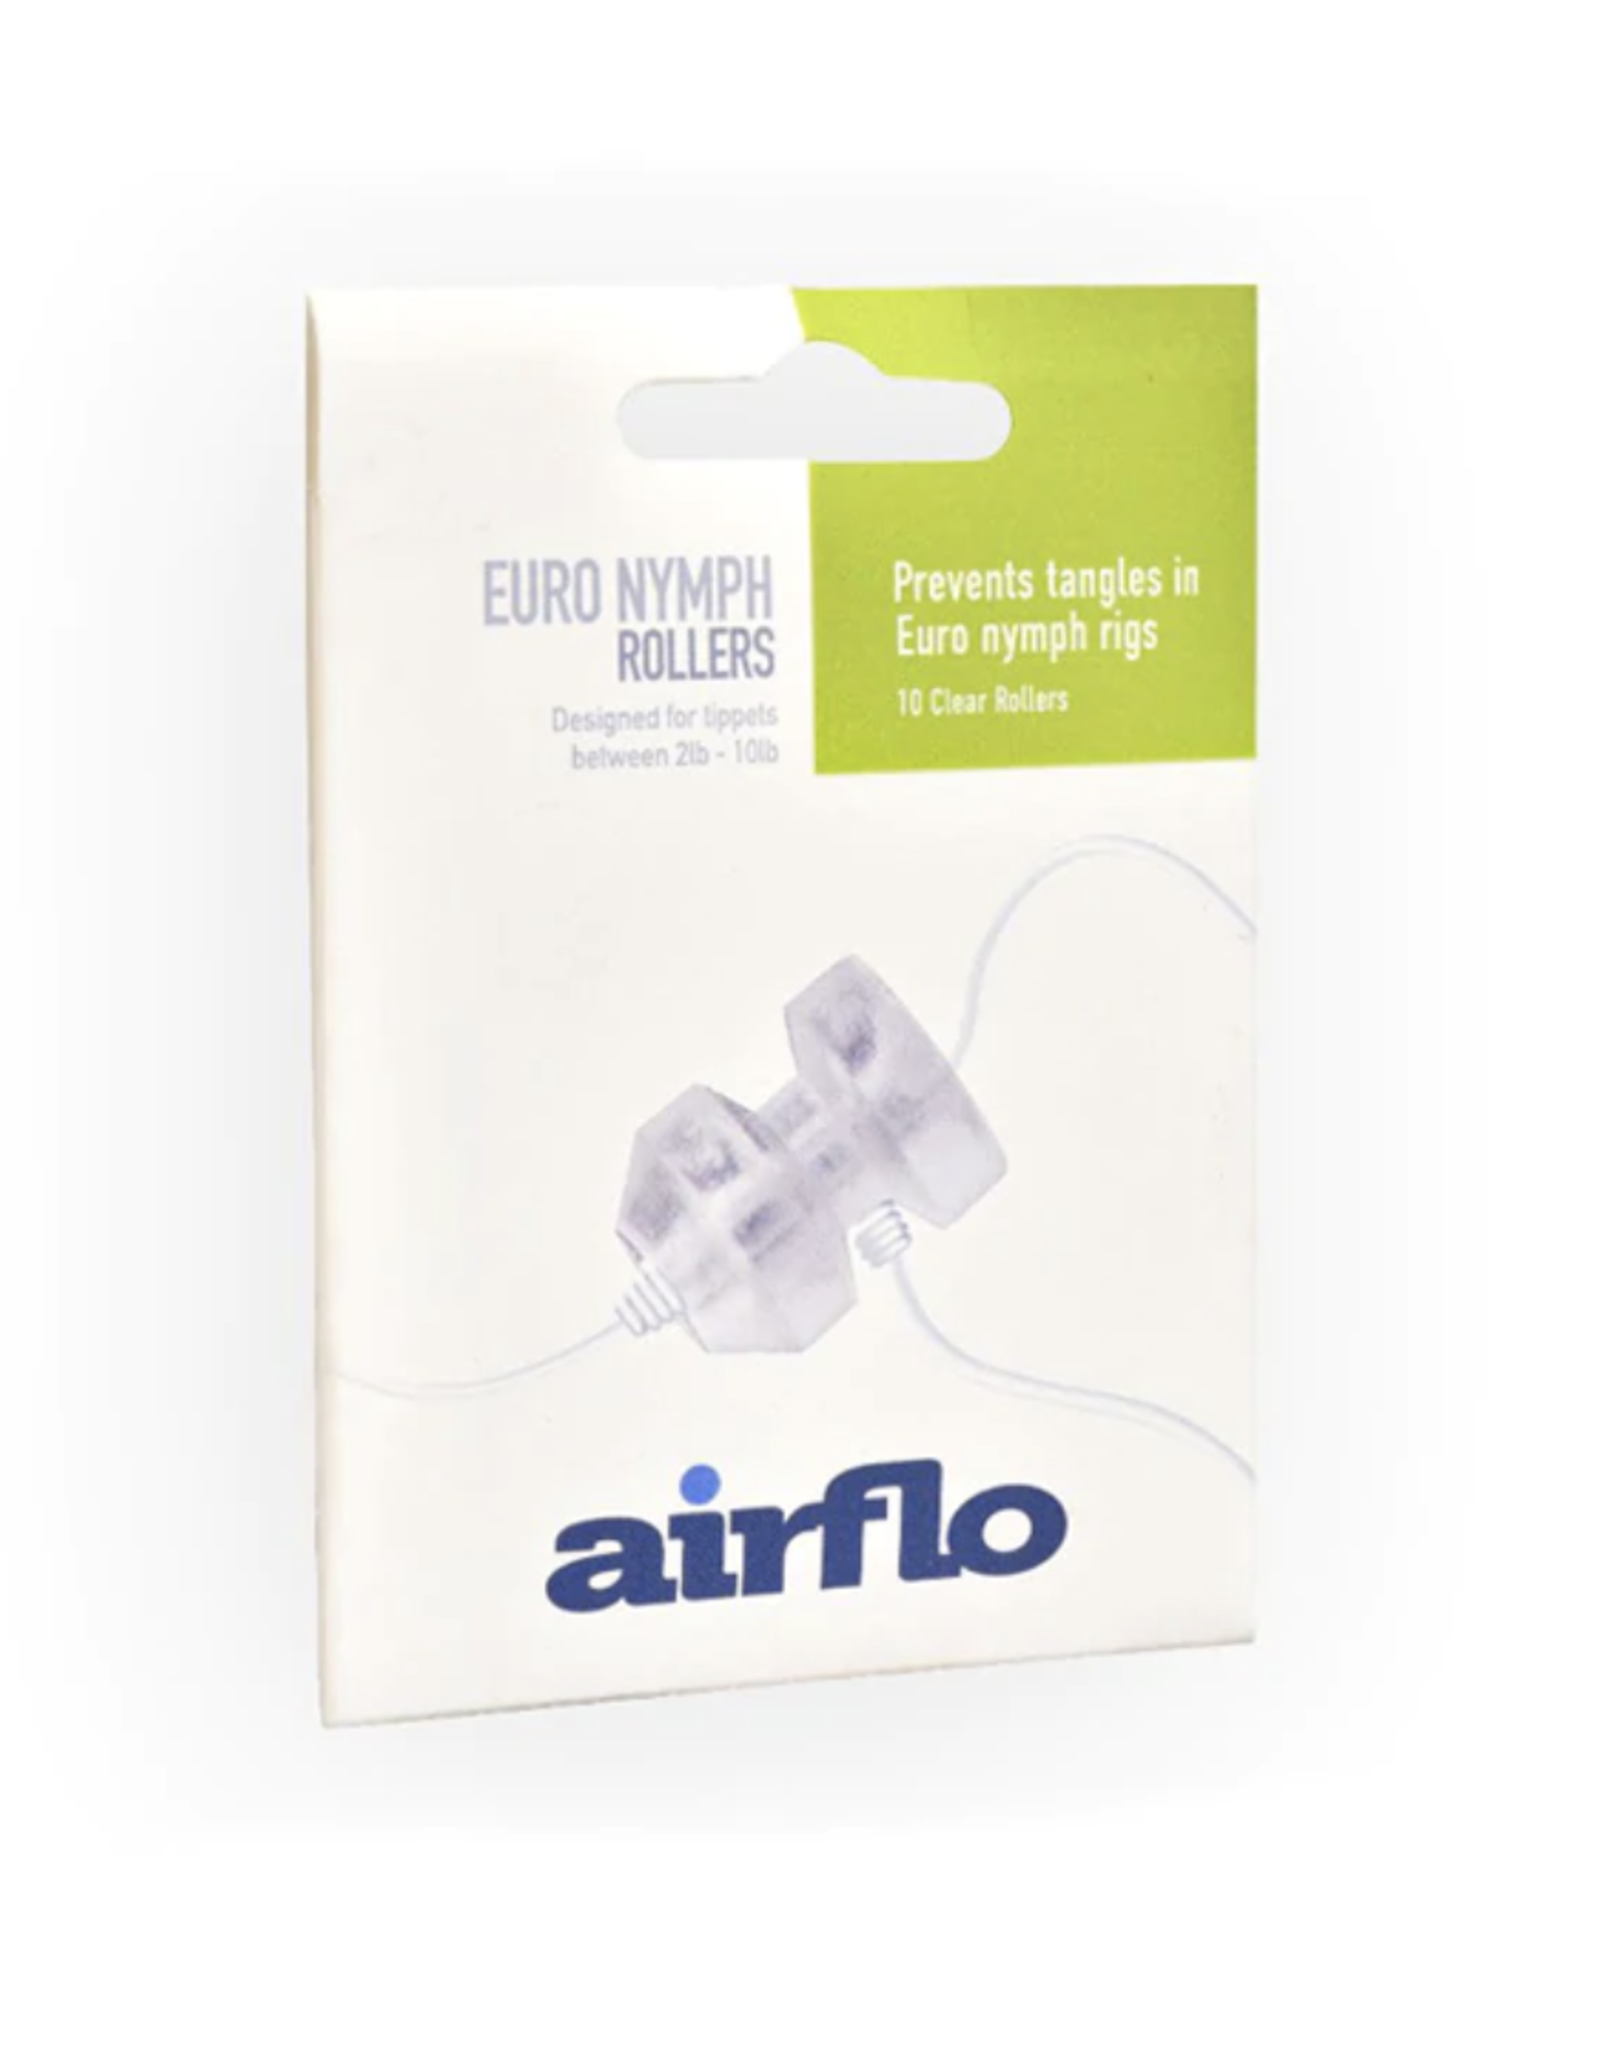 Airflo Airflo Euro Nymph Rollers